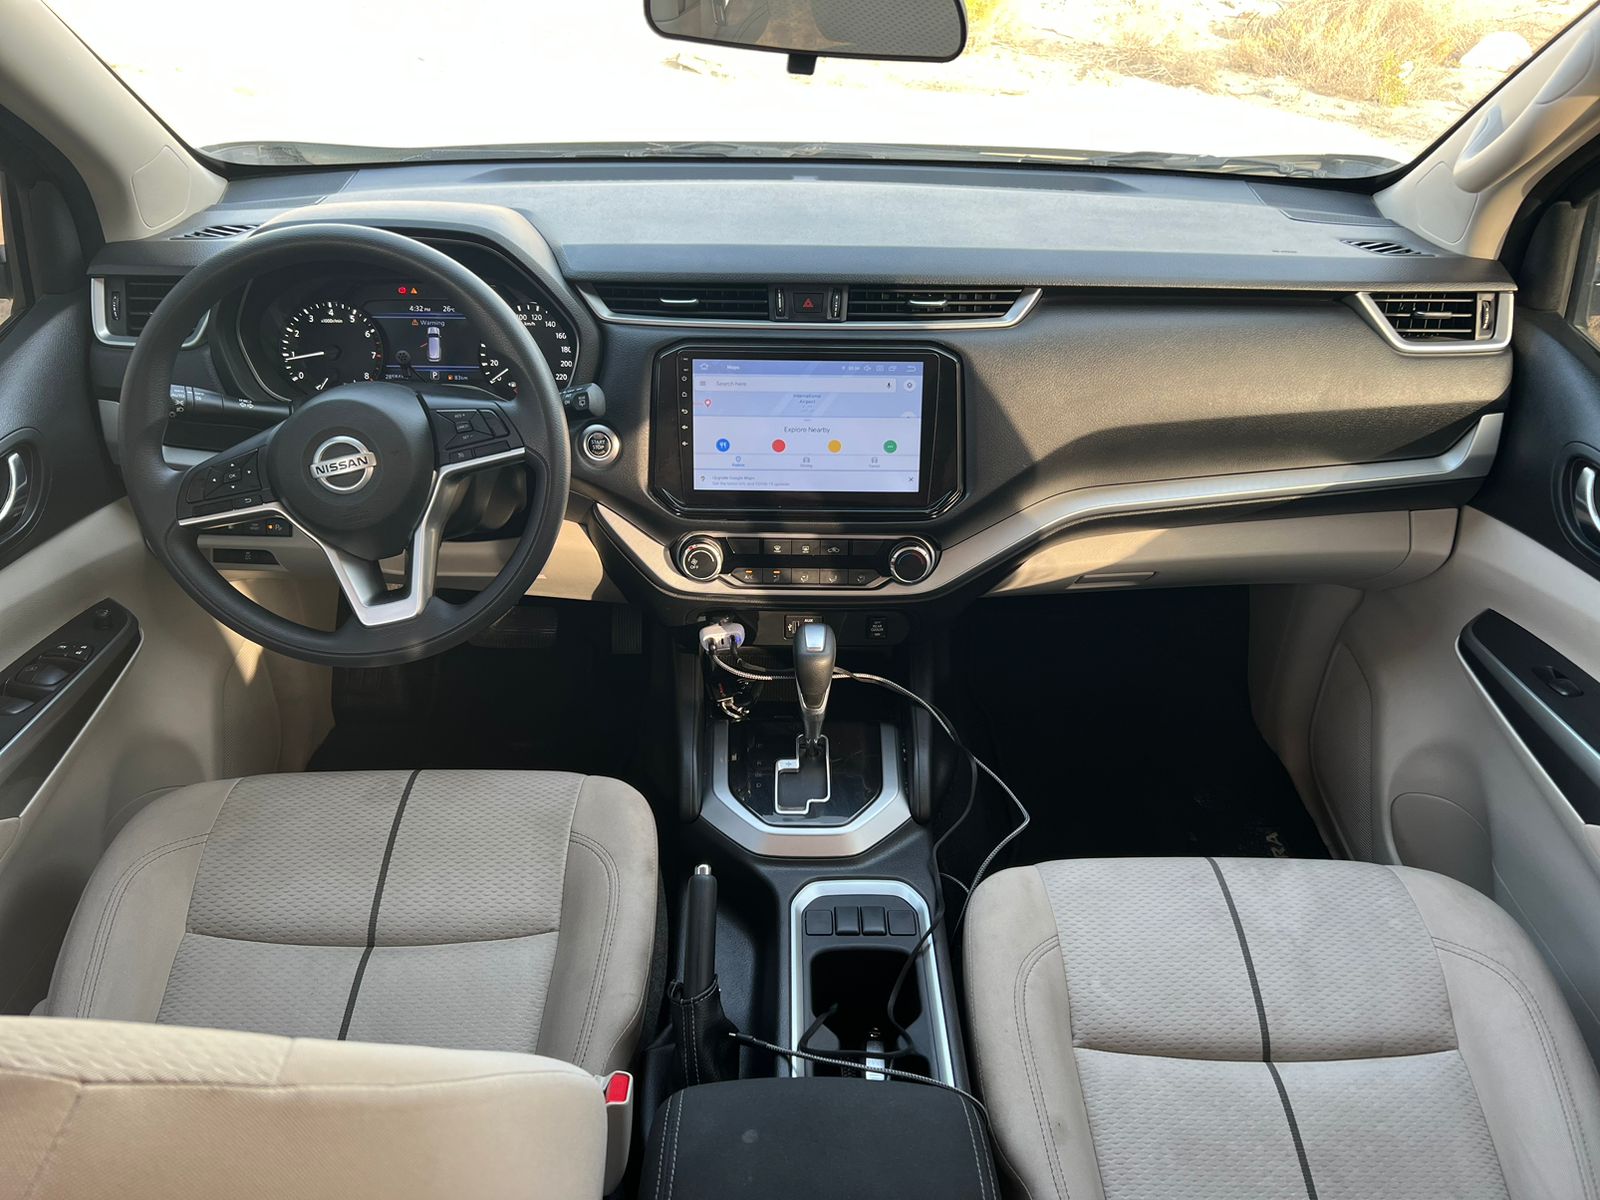 Nissan Xterra 2023 Interior beige seats and black interior